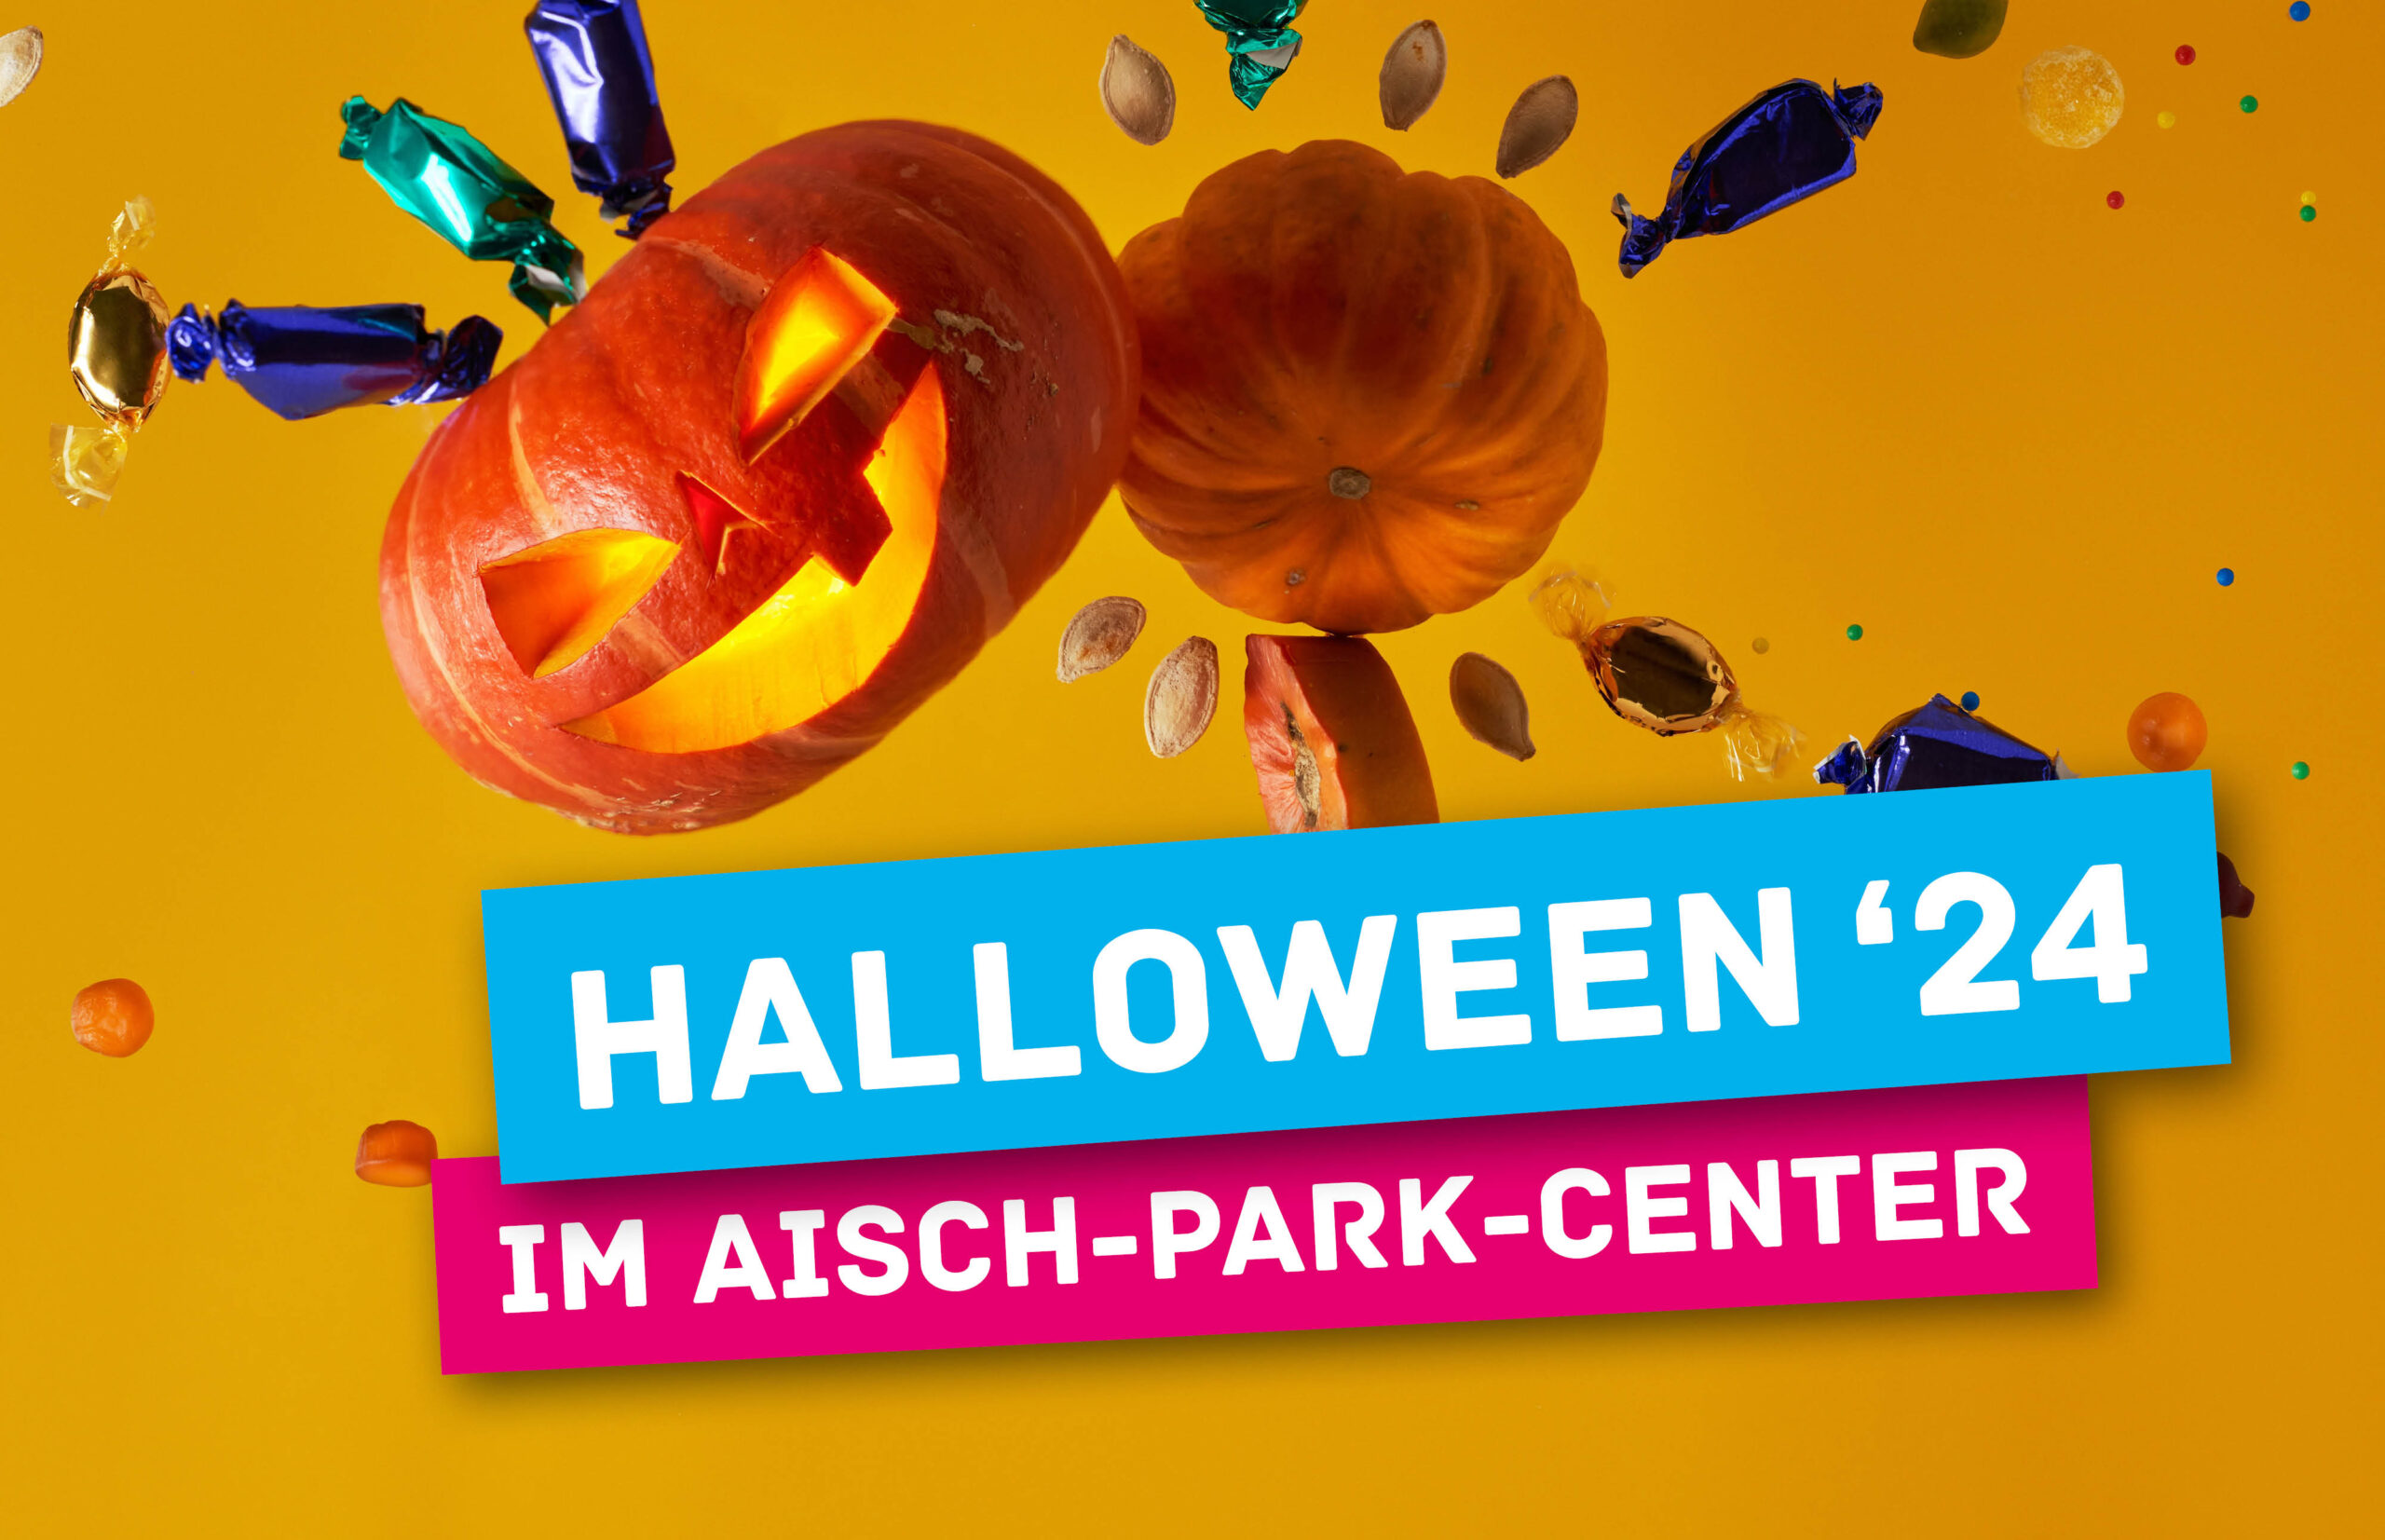 Bild zum Event Halloween im Aisch-Park-Center